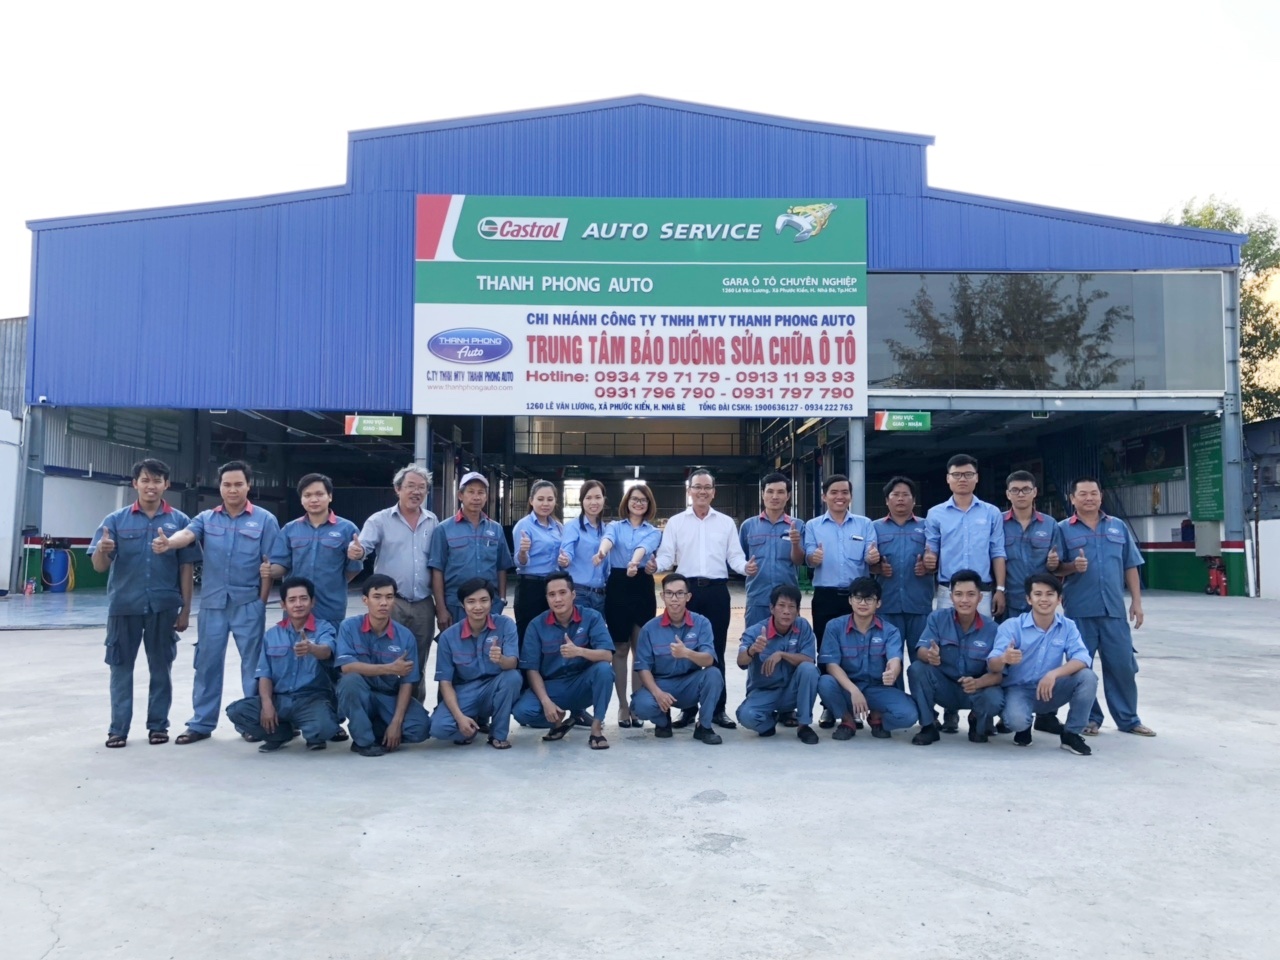 Garage Thanh Phong Auto - Professional Car Maintenance & Repair In Ho Chi Minh City, Vietnam